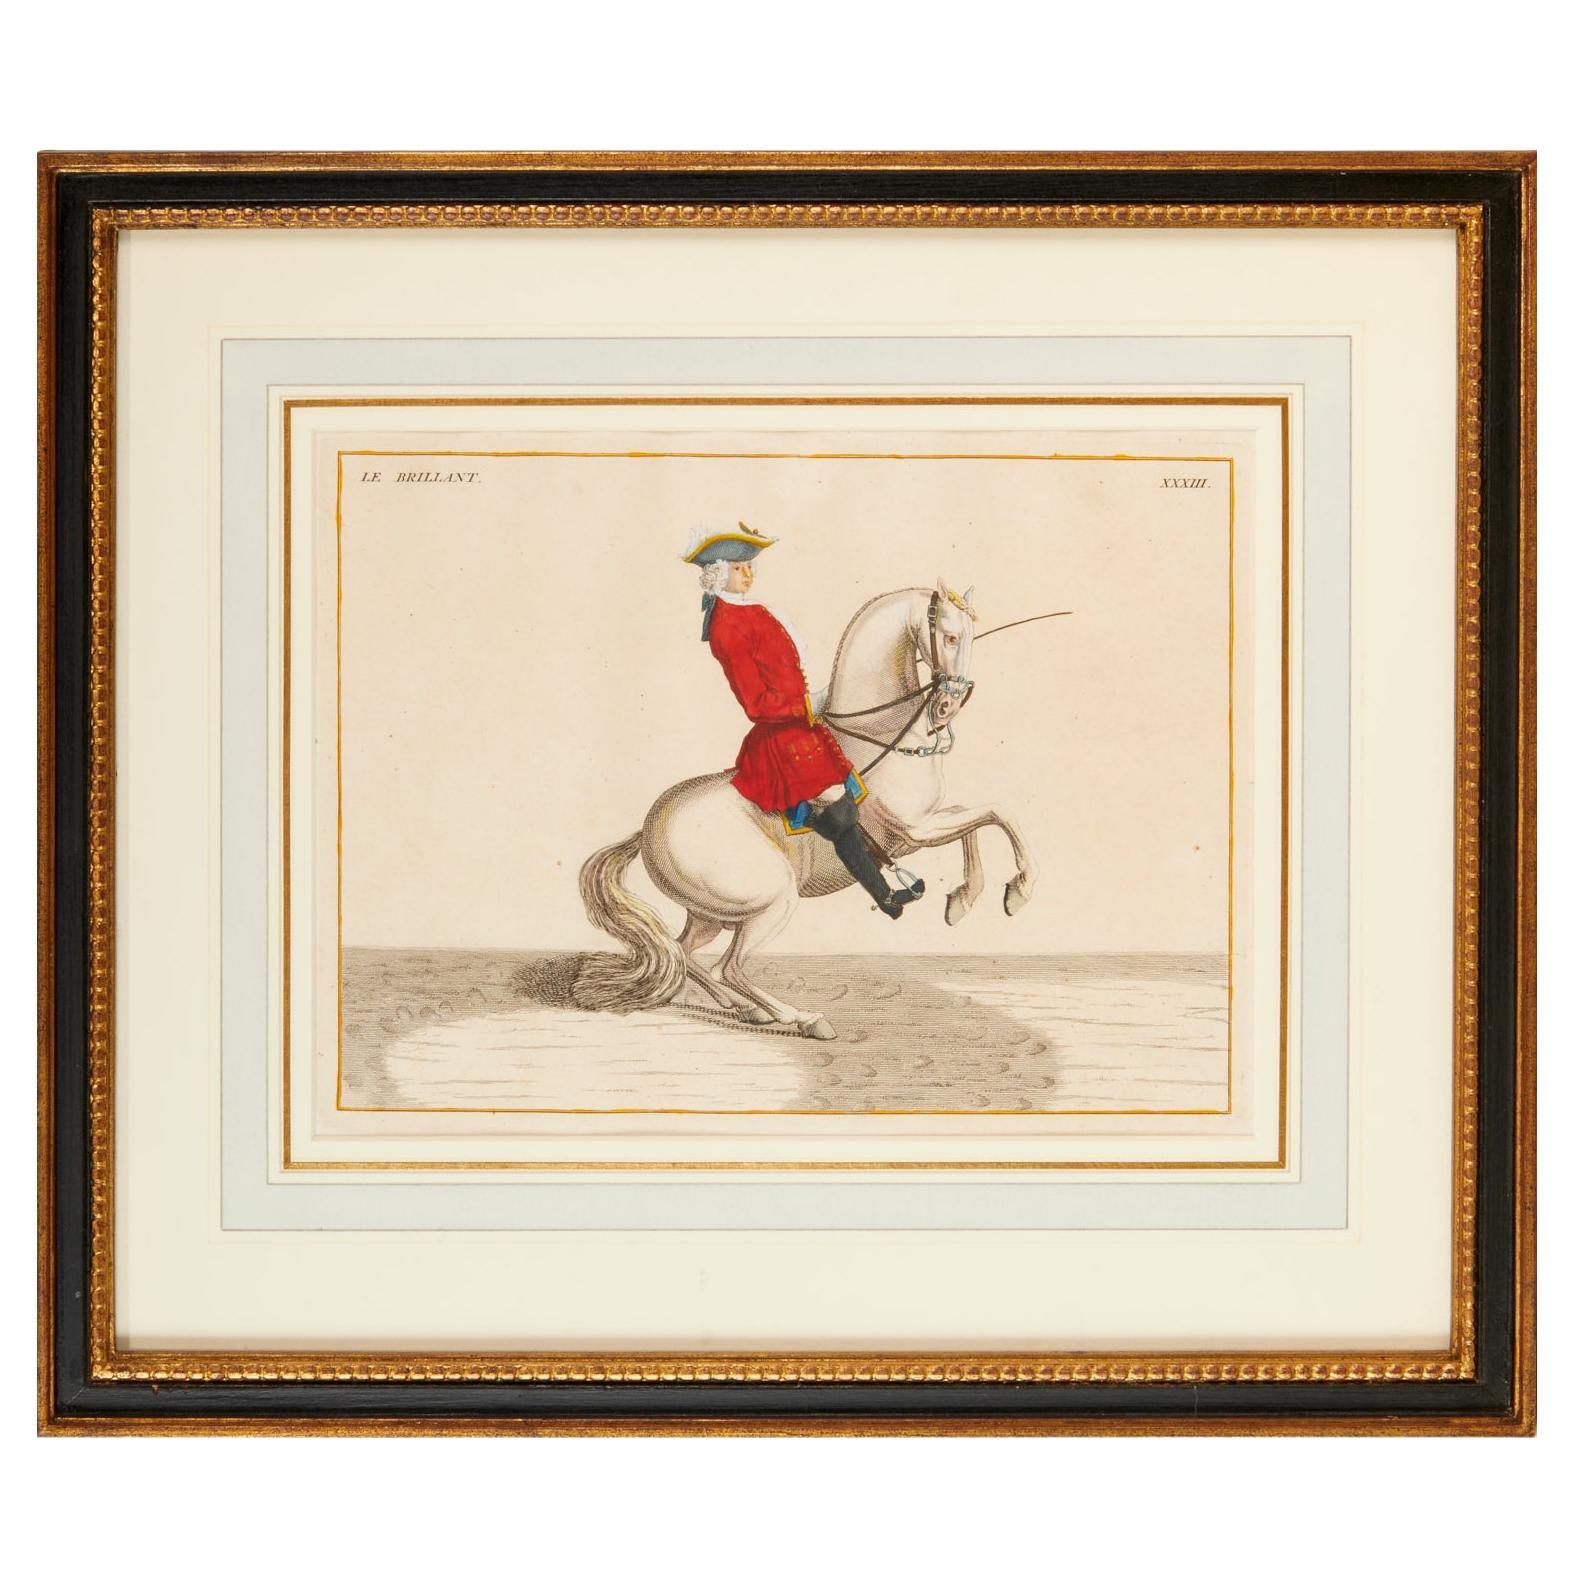 Baron Rais d'Eisenberg, Hand-Colored Equestrian Engraving c. 1747, "Le Brillant" For Sale